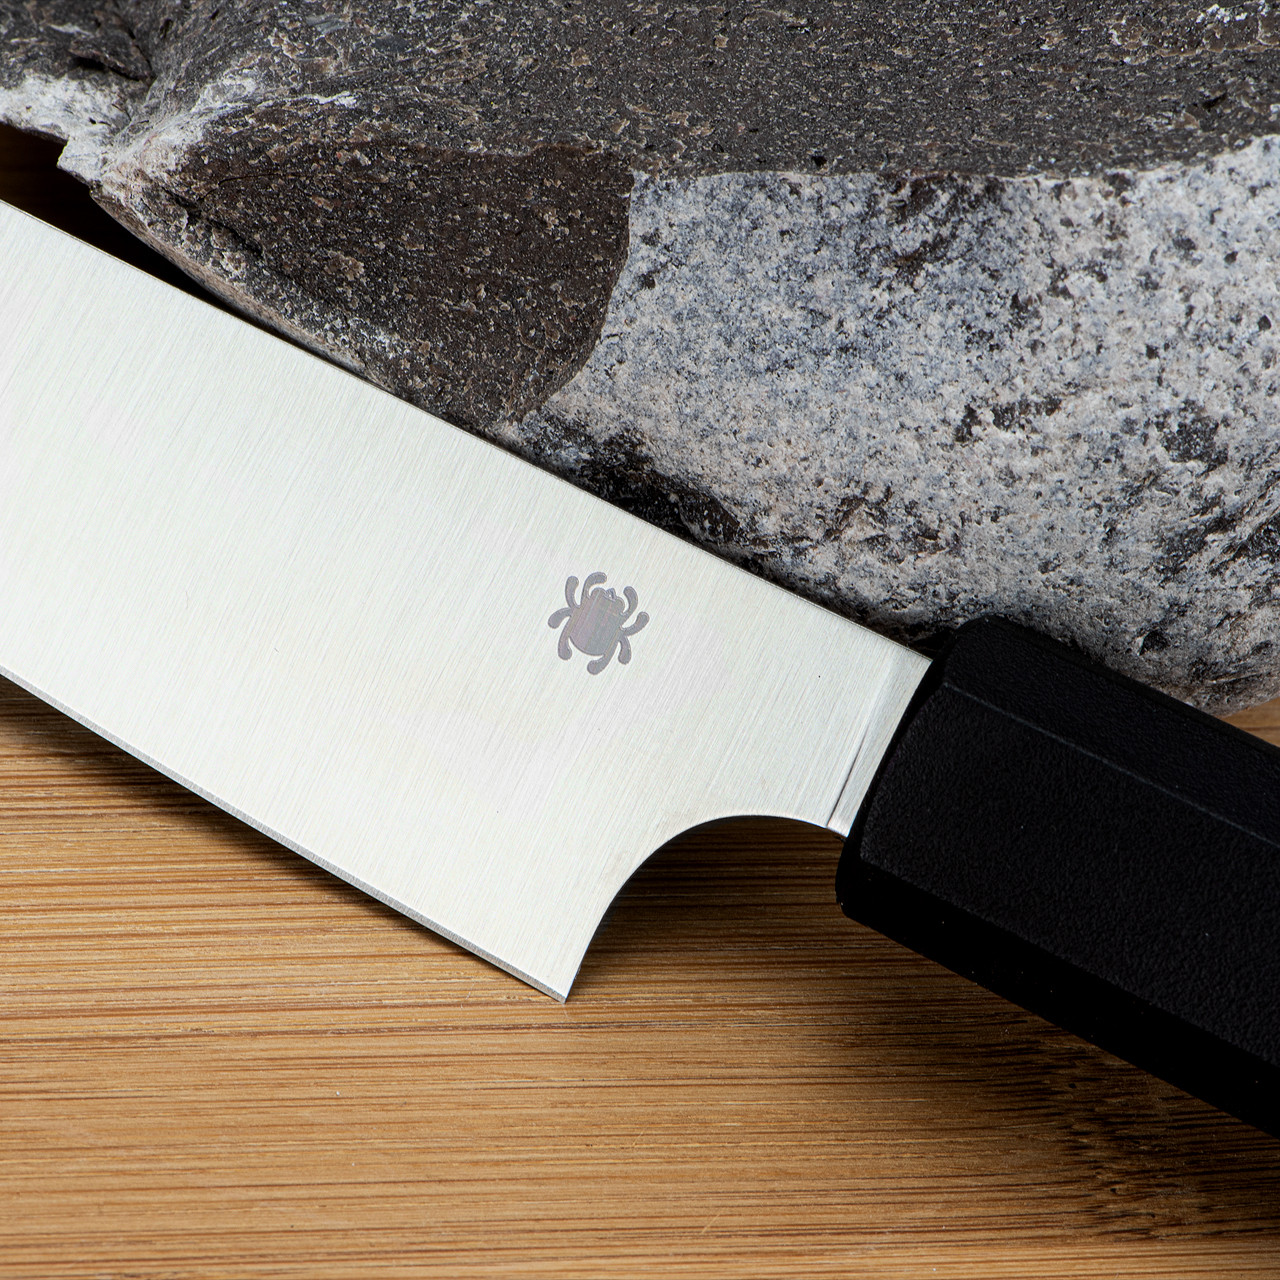 Spyderco Carter Minarai, Gyuto Chef Knife